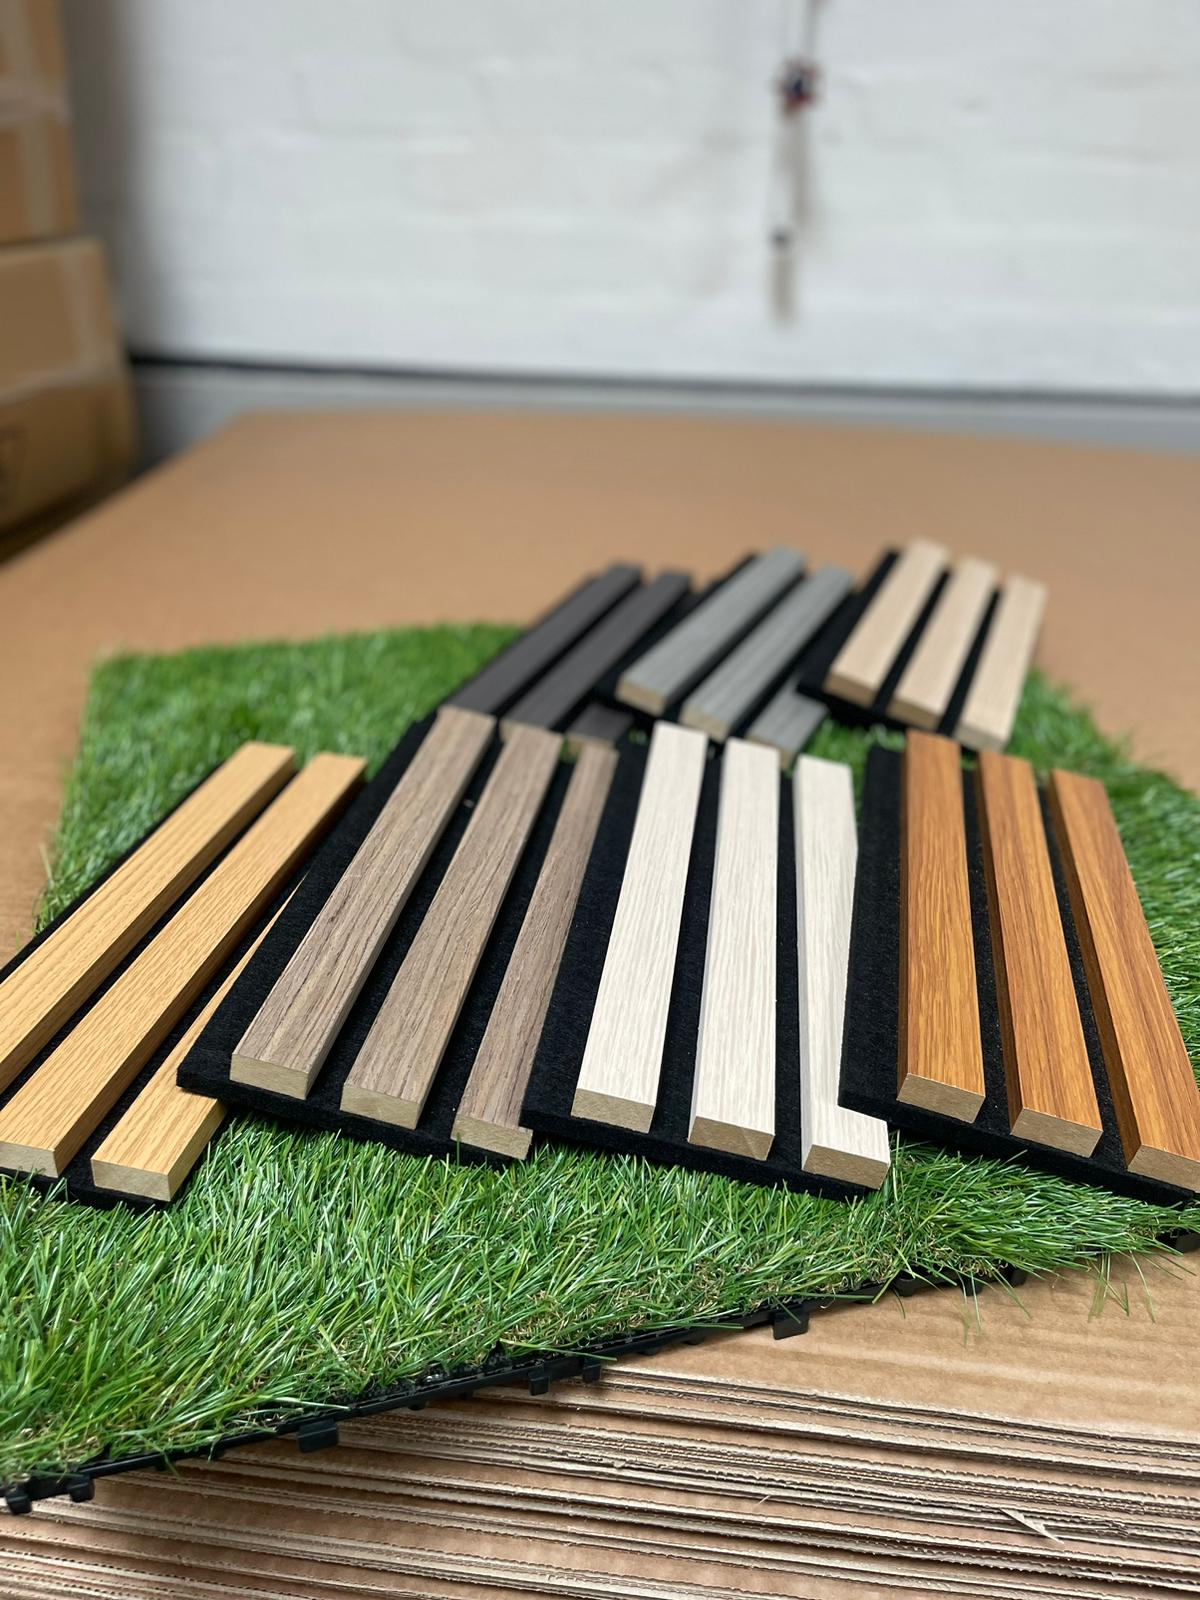 Sample Product 30x12.5x2.1 cm Dark Wood Acoustic Wood Wall Panels